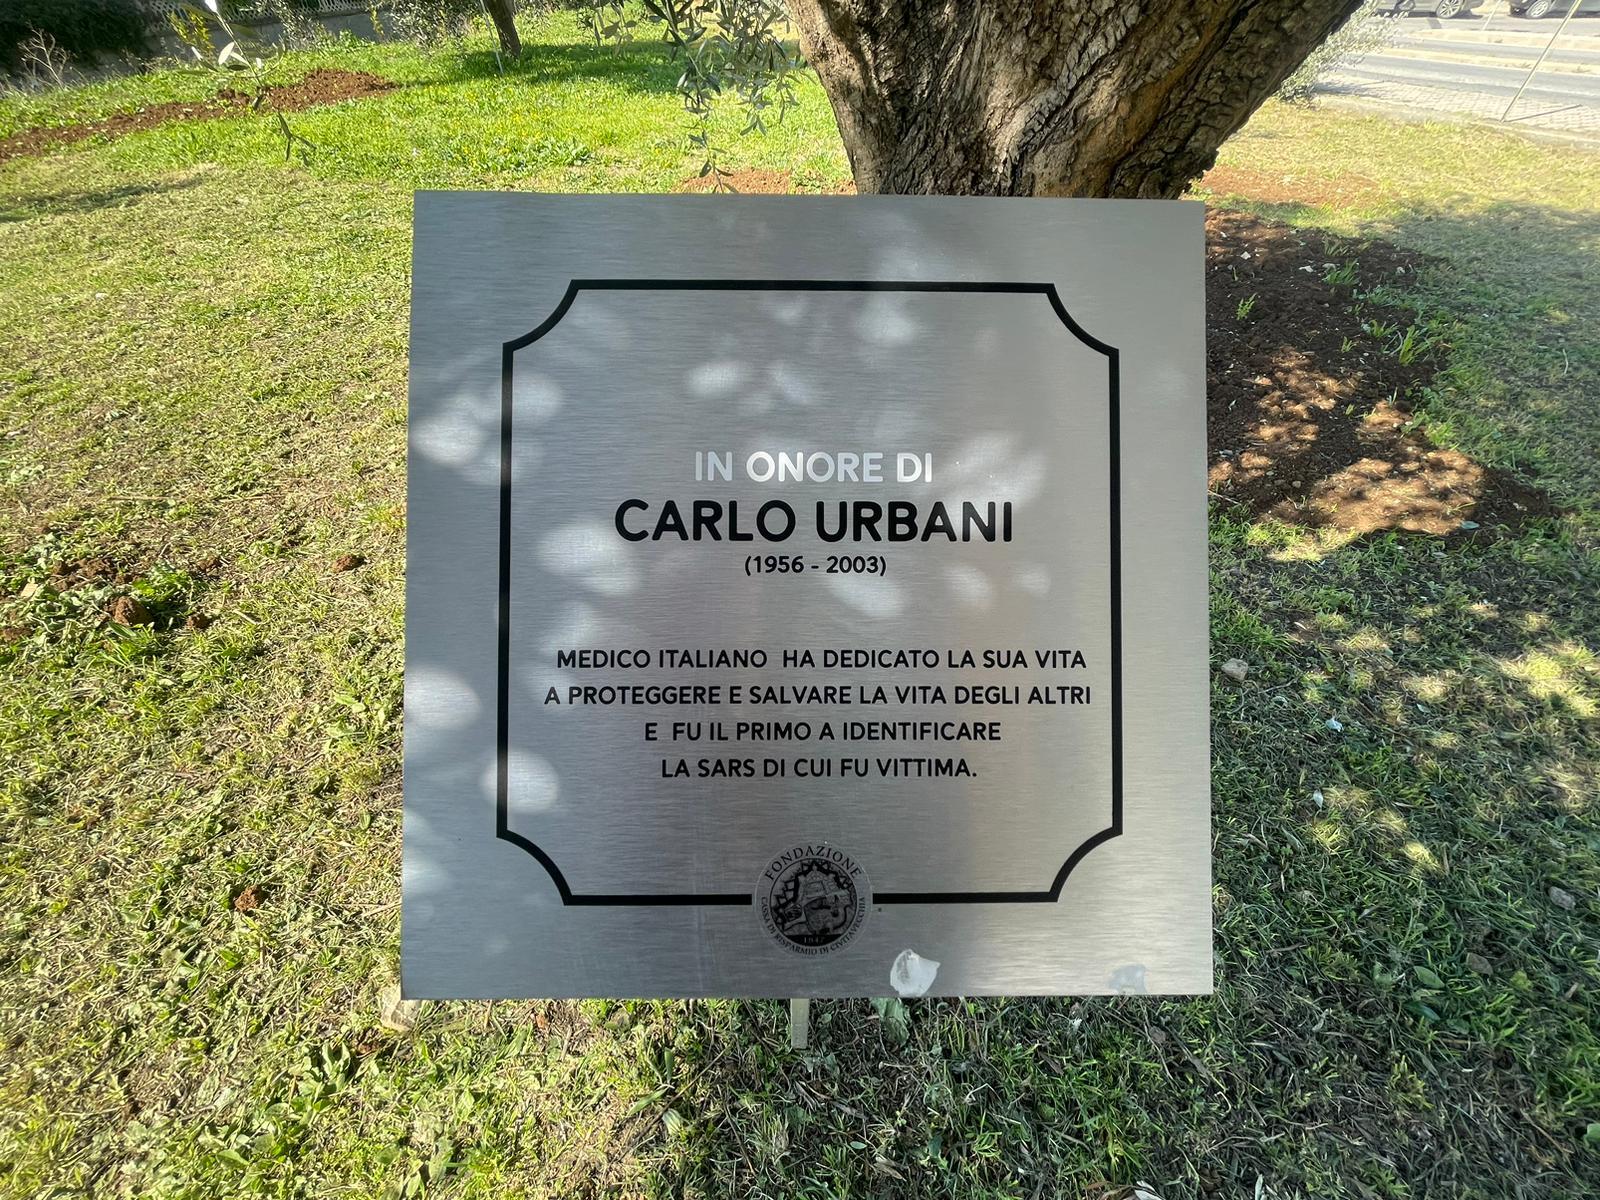 Carlo Urbani among the Righteous honored in Civitavecchia